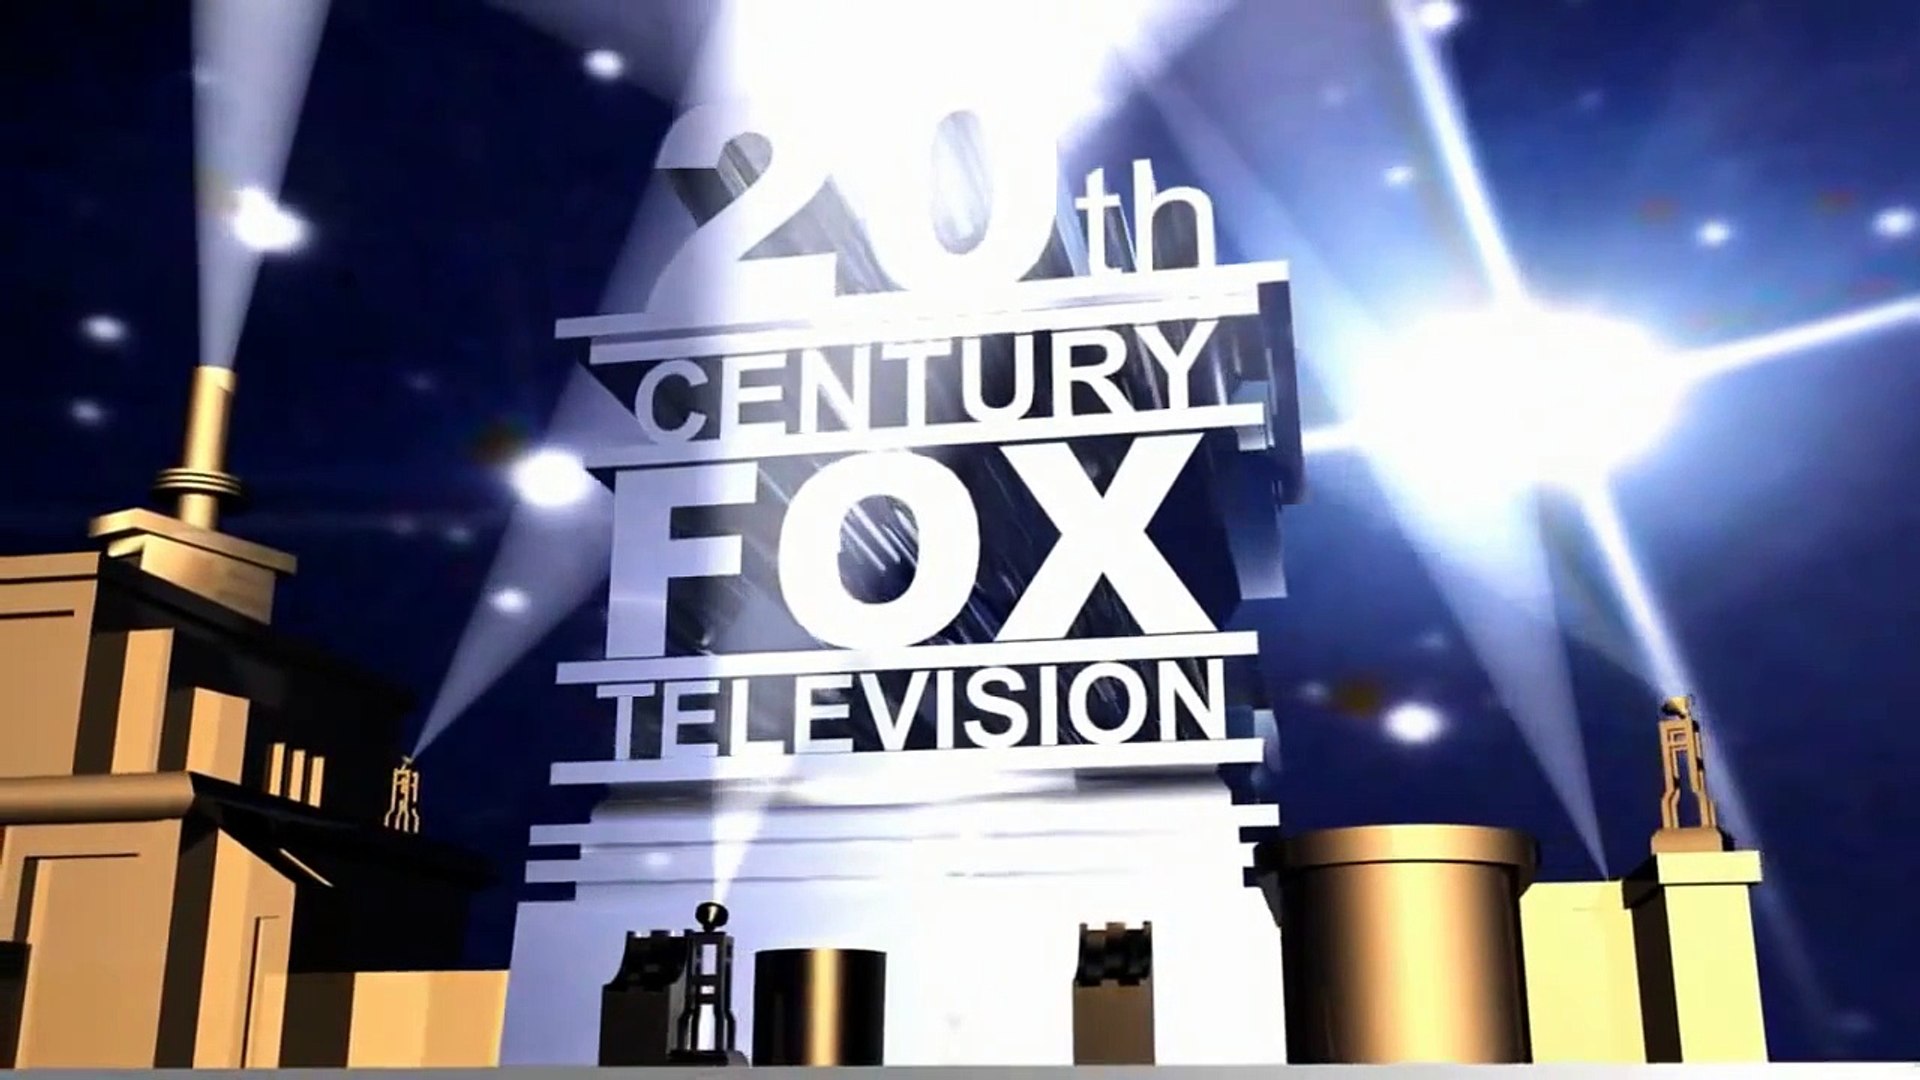 20th century fox logo history fast motion 